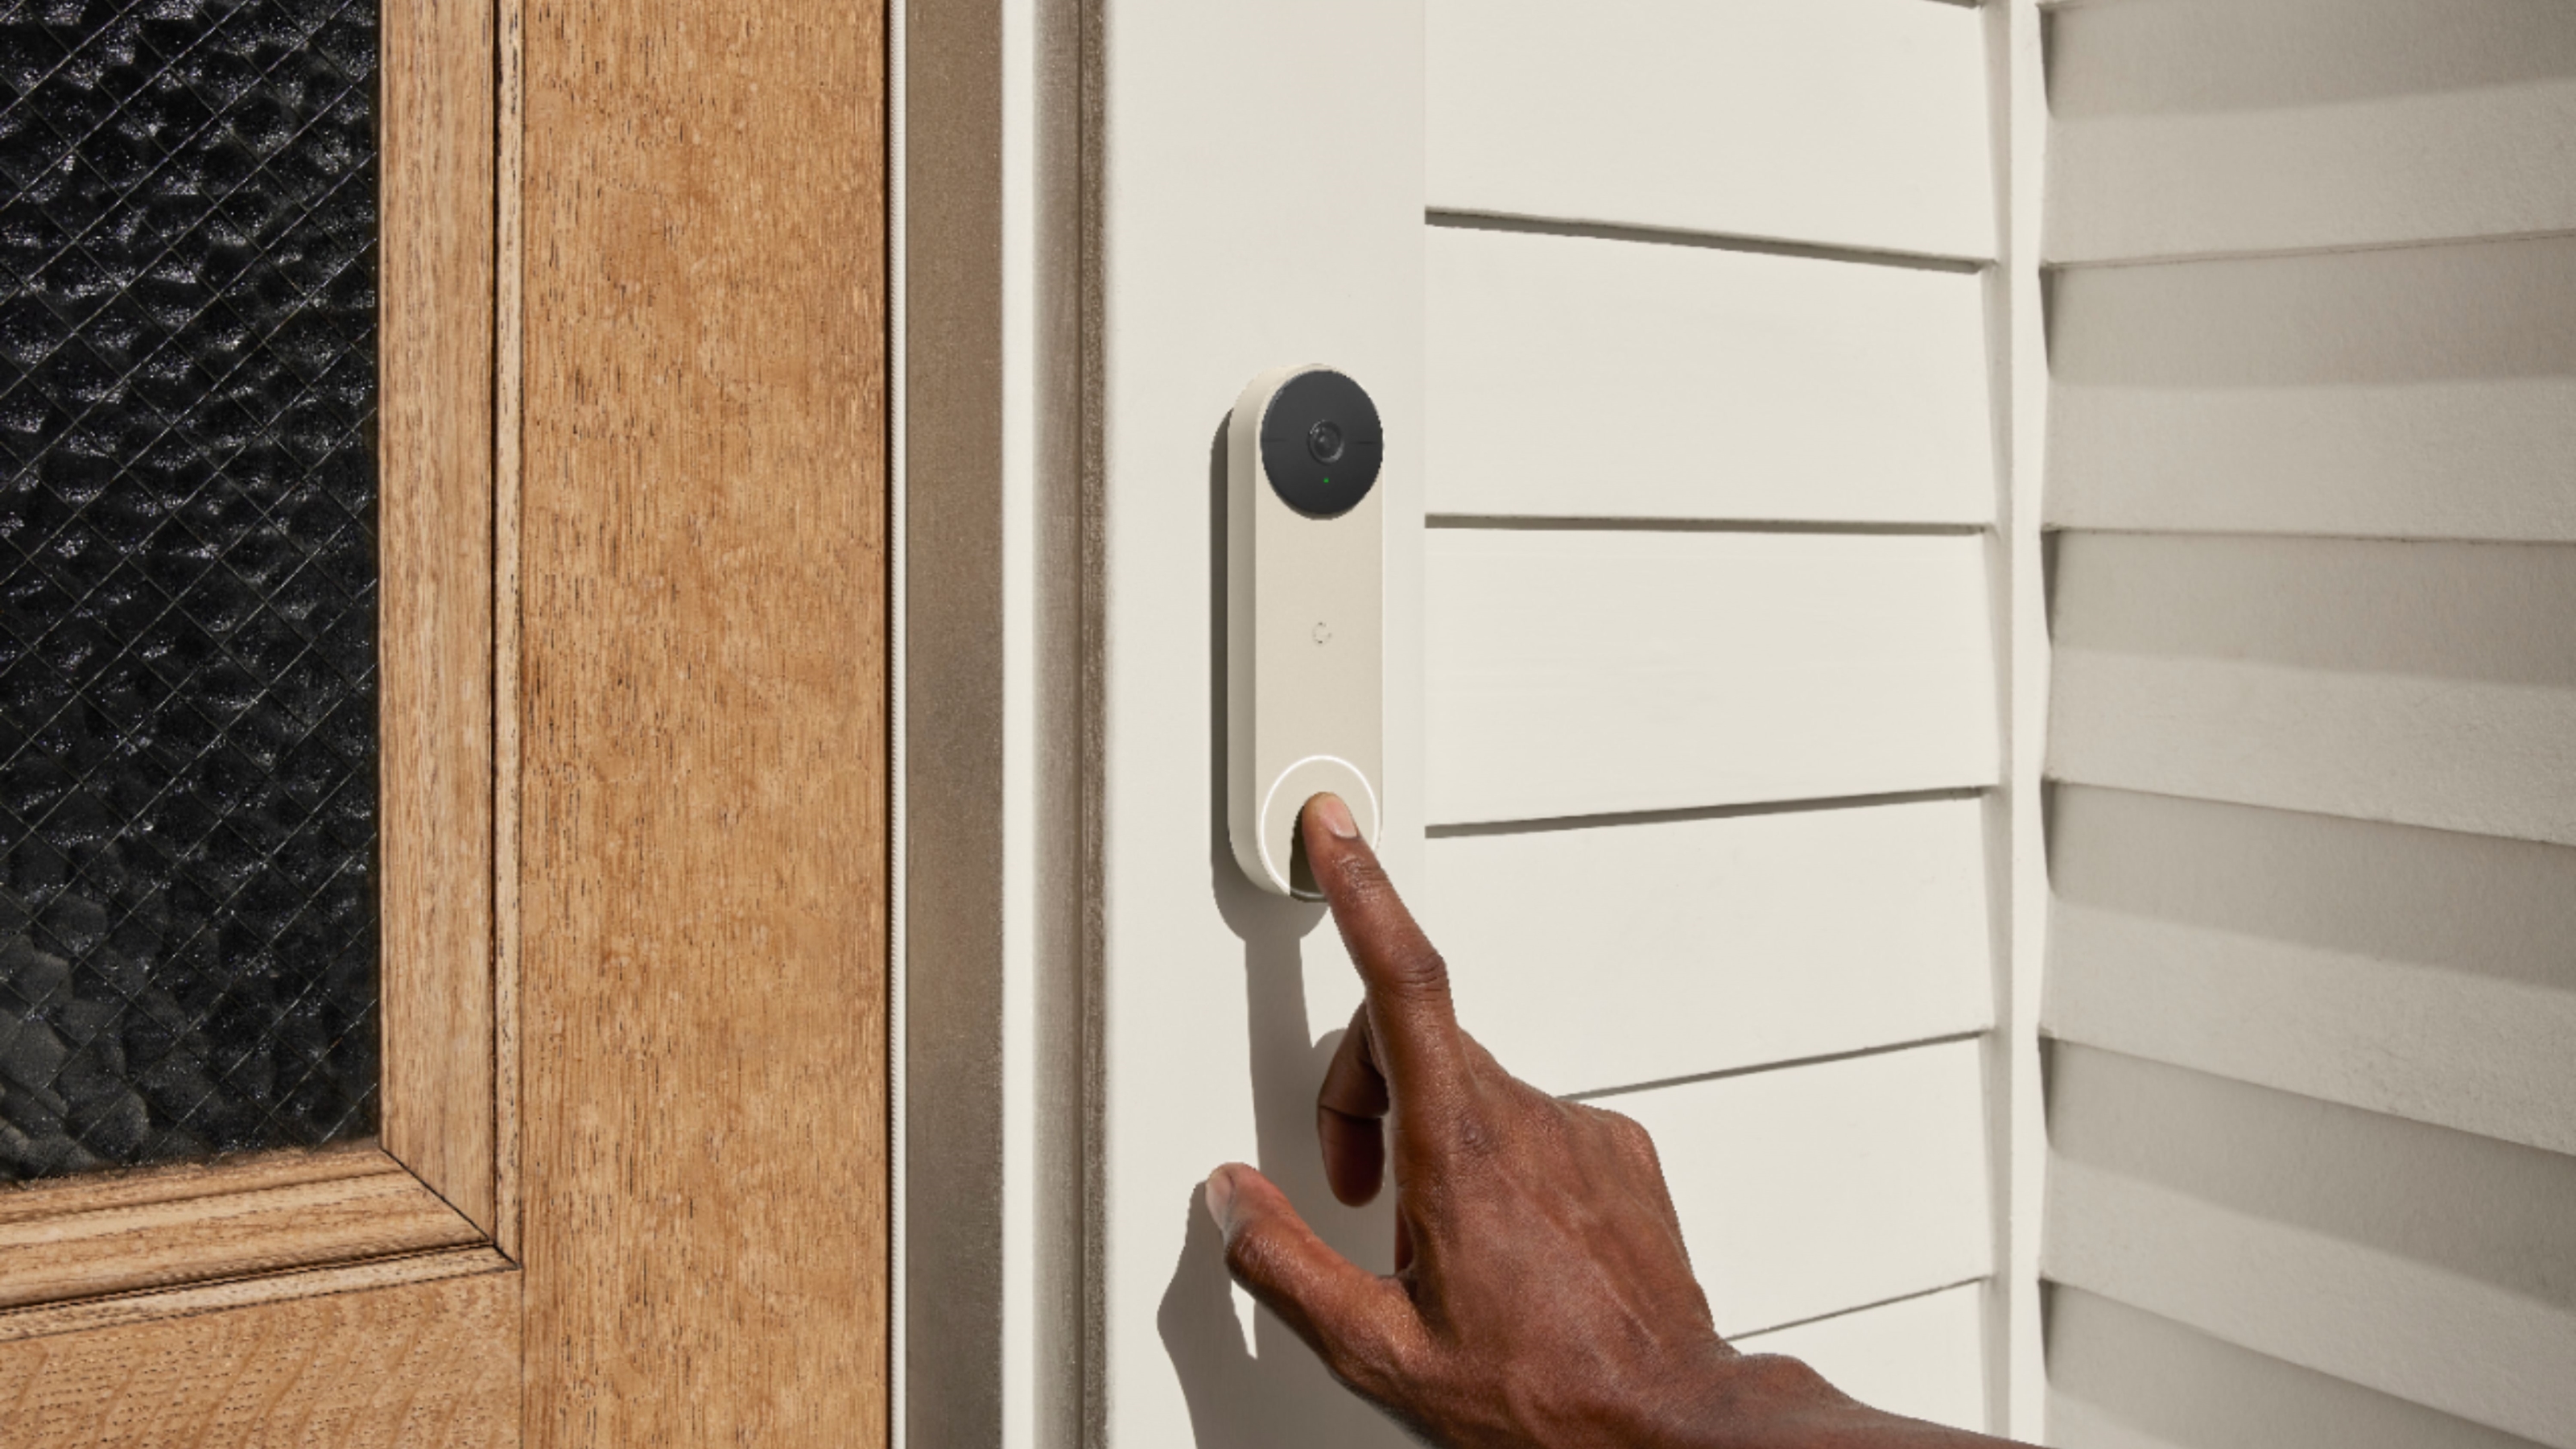 Kerkbank last Definitie Ring vs Nest doorbell – an expert verdict on which to choose | Livingetc